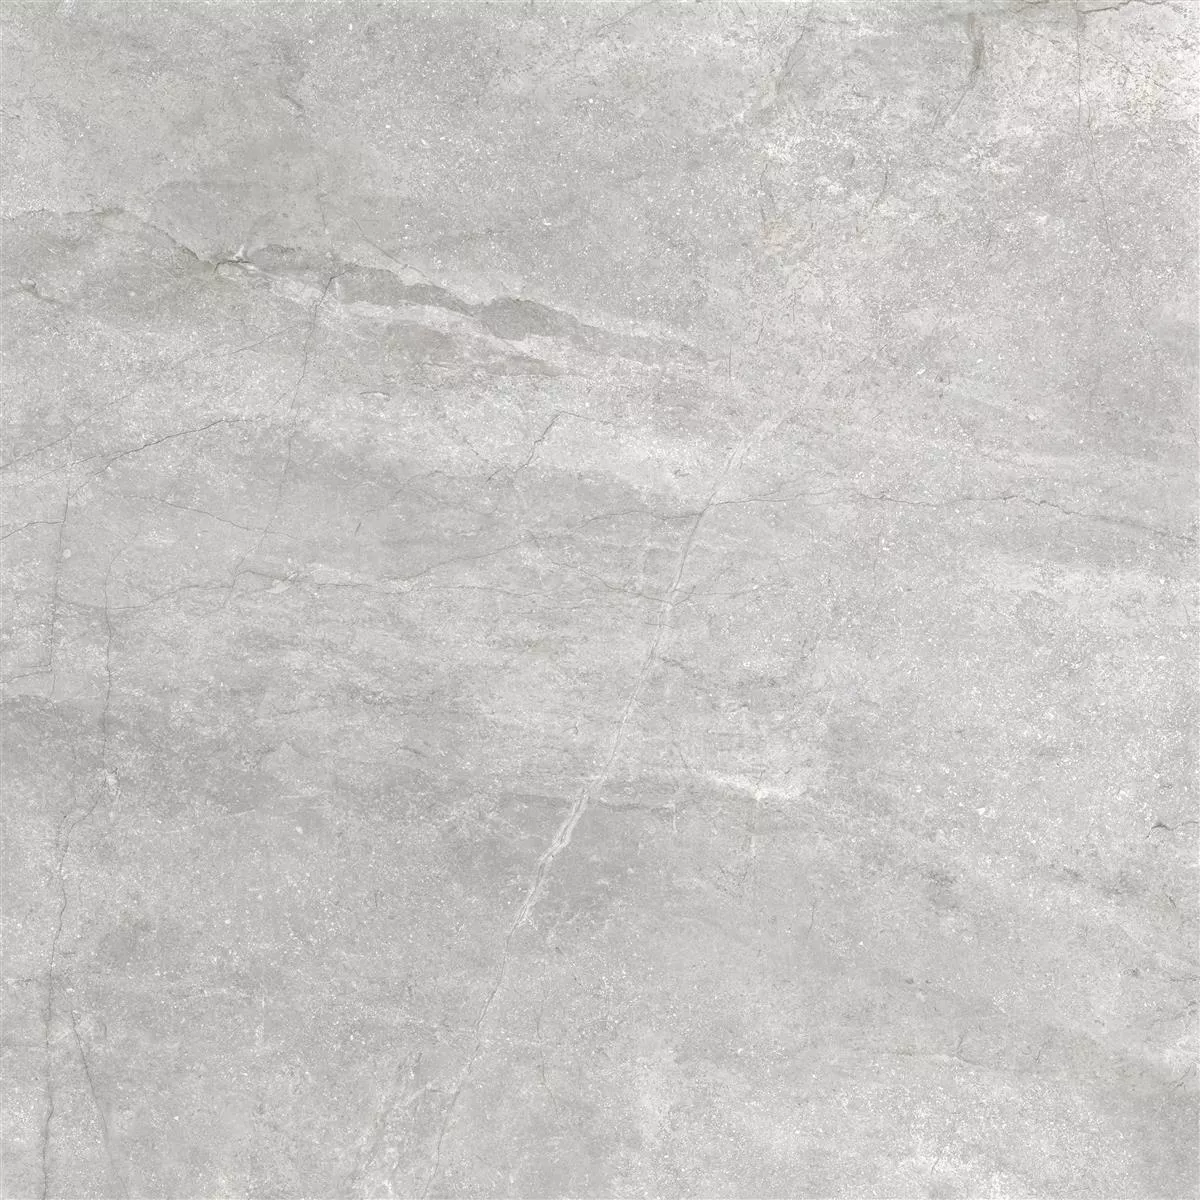 Vzorek Podlahové Dlaždice Pangea Mramorový Vzhled Matný Stříbrná 60x60cm